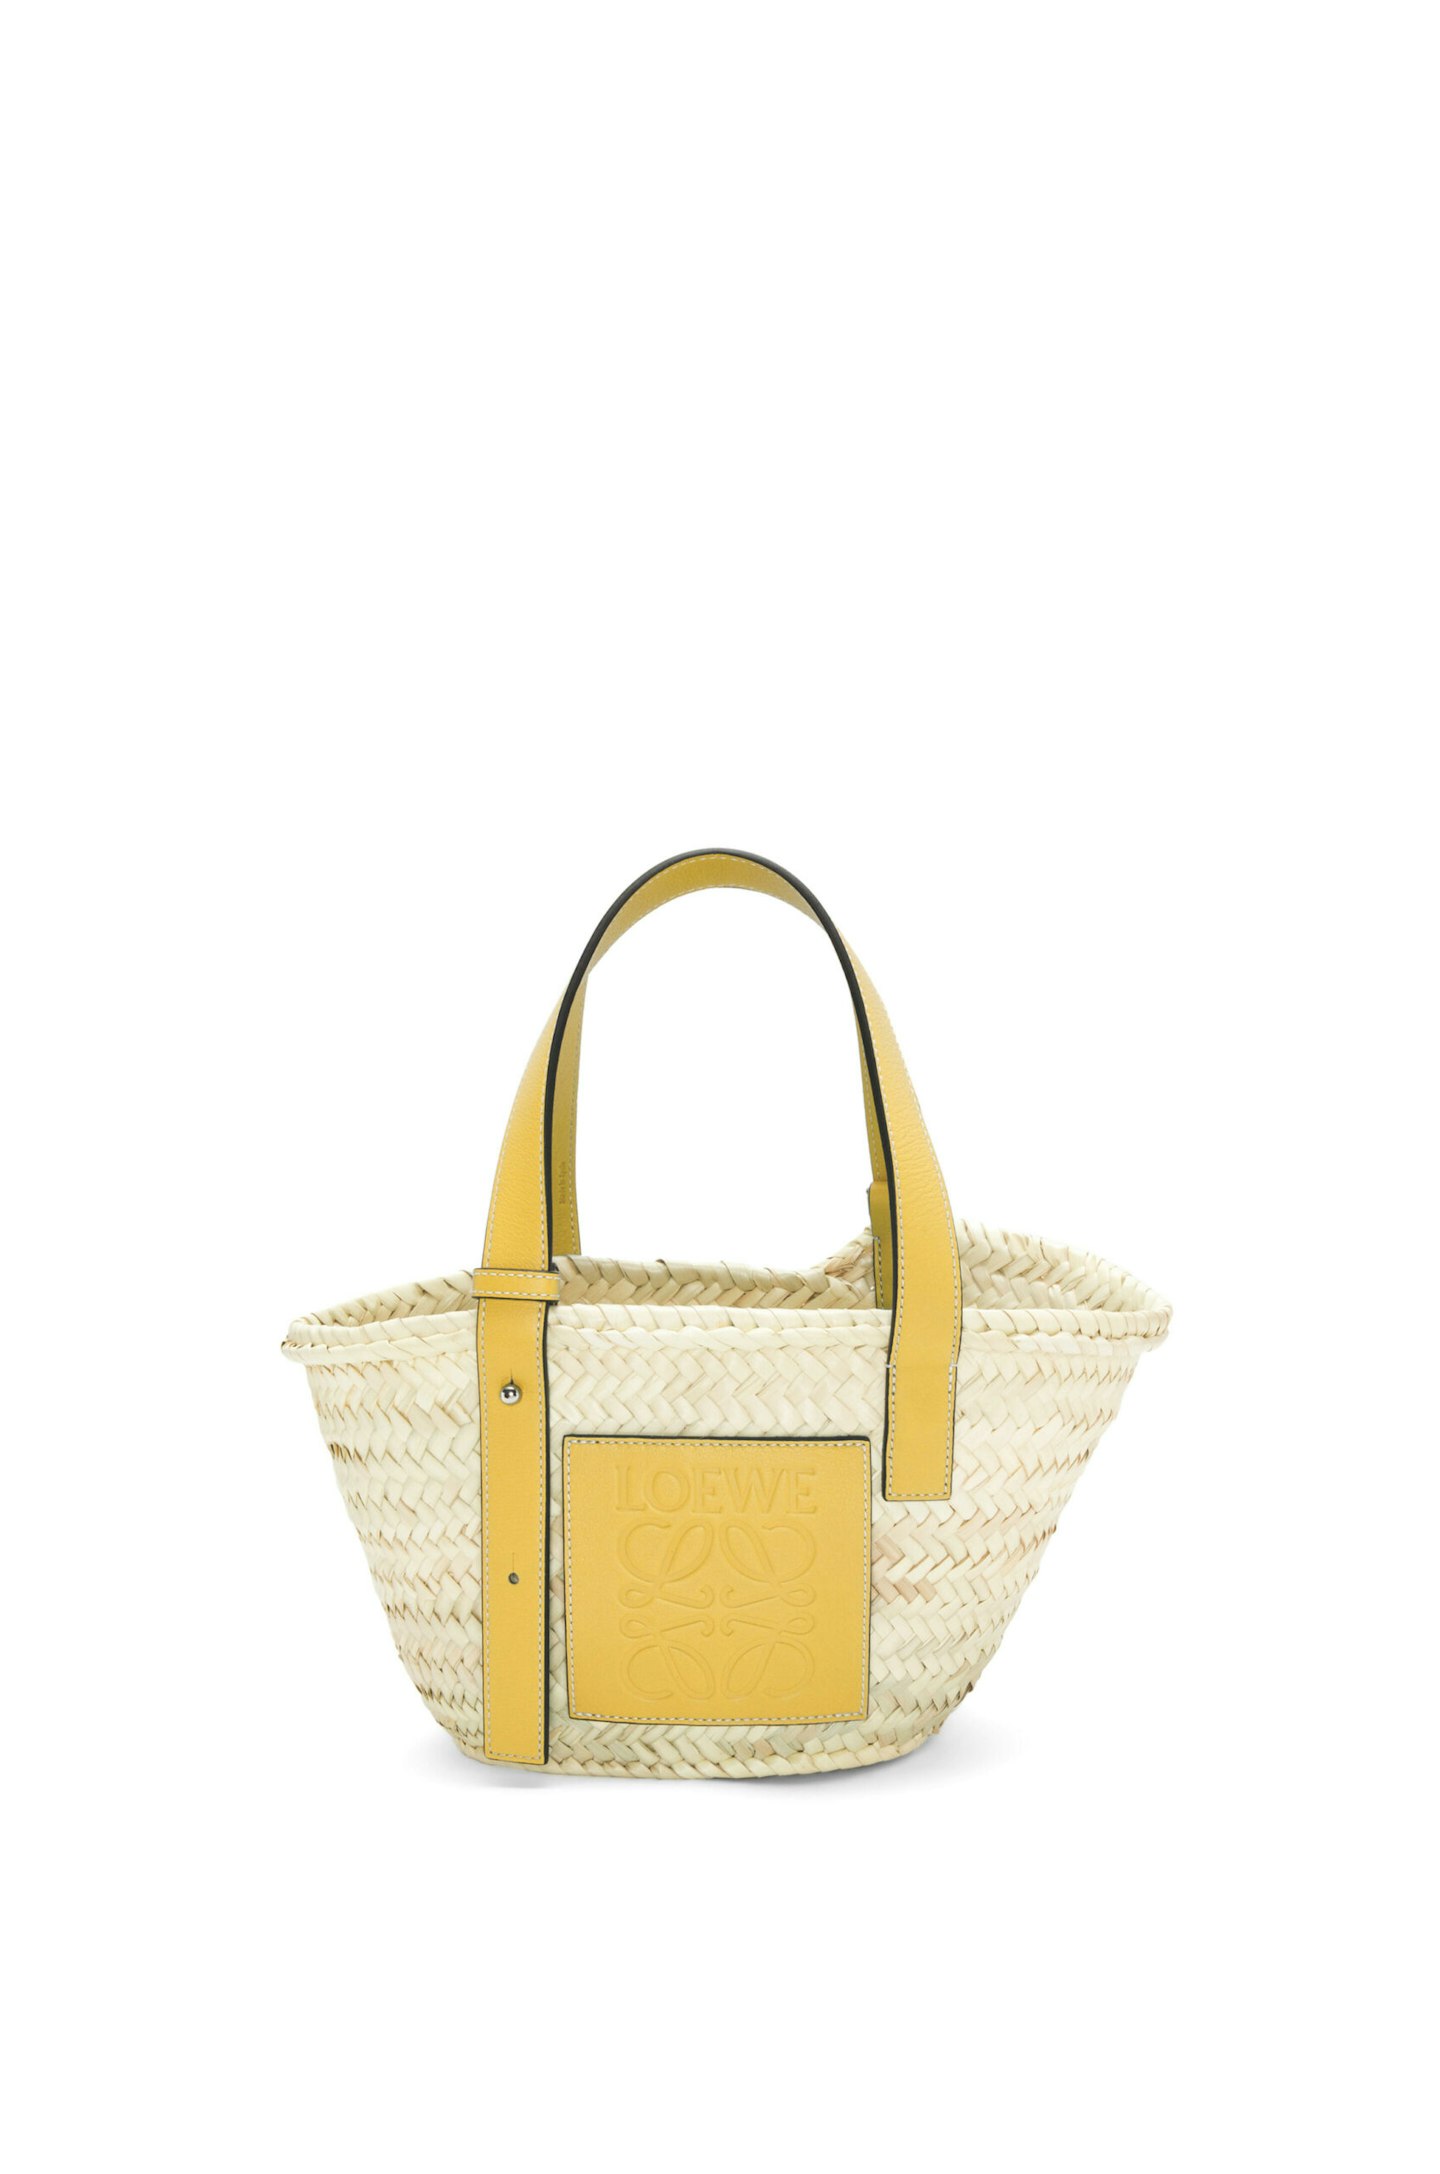 EmRata Owns Not One But Two of the Same Stylish Handbag - Grazia